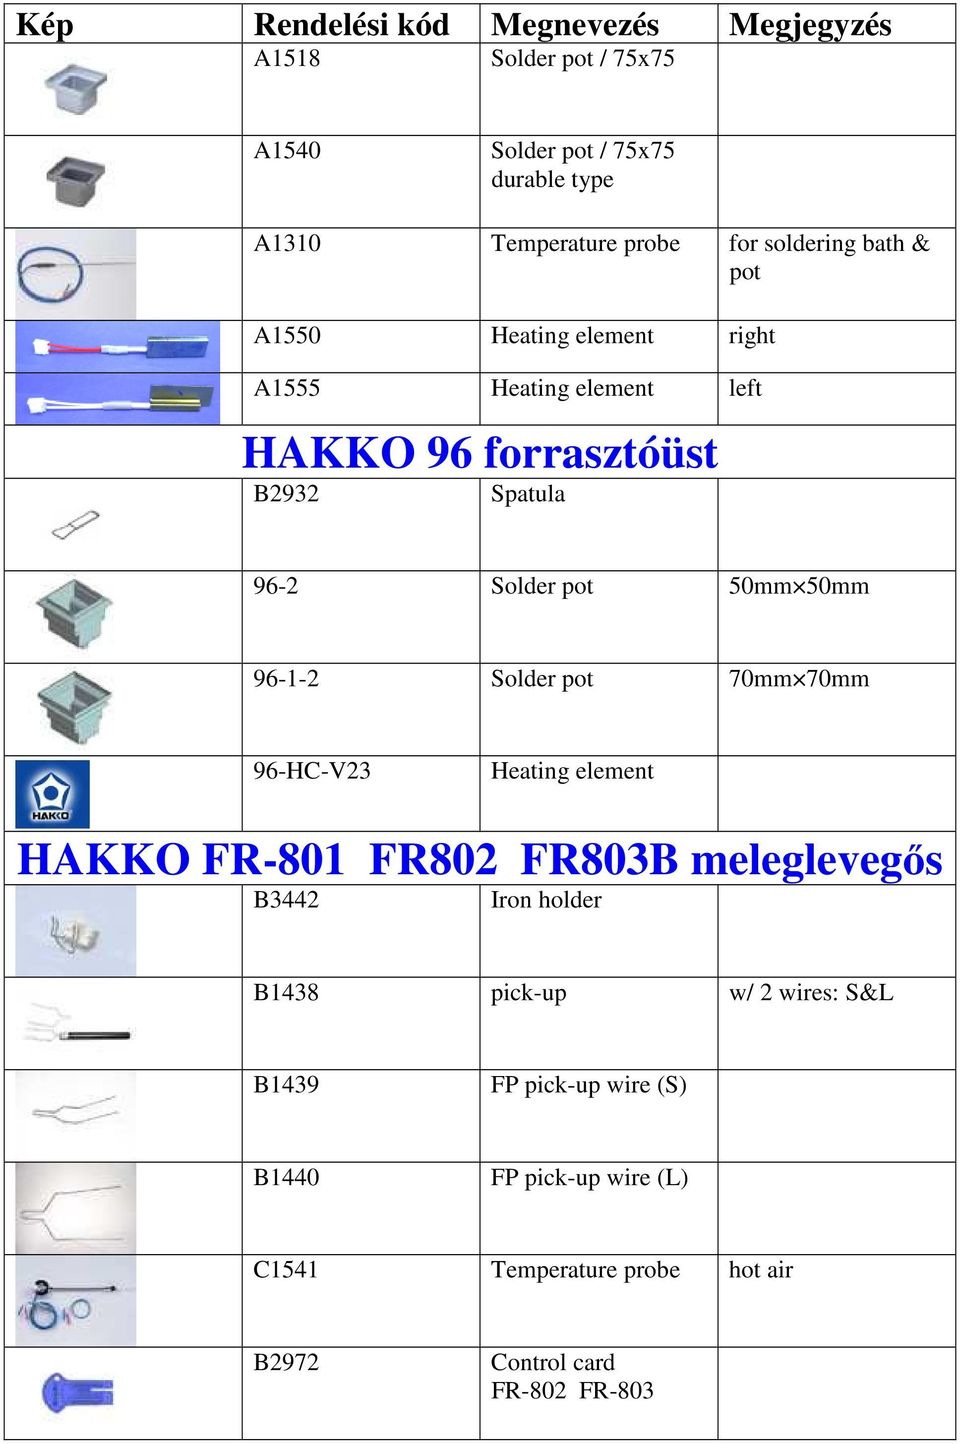 Solder pot 70mm 70mm 96-HC-V23 Heating element HAKKO FR-801 FR802 FR803B meleglevegős B3442 Iron holder B1438 pick-up w/